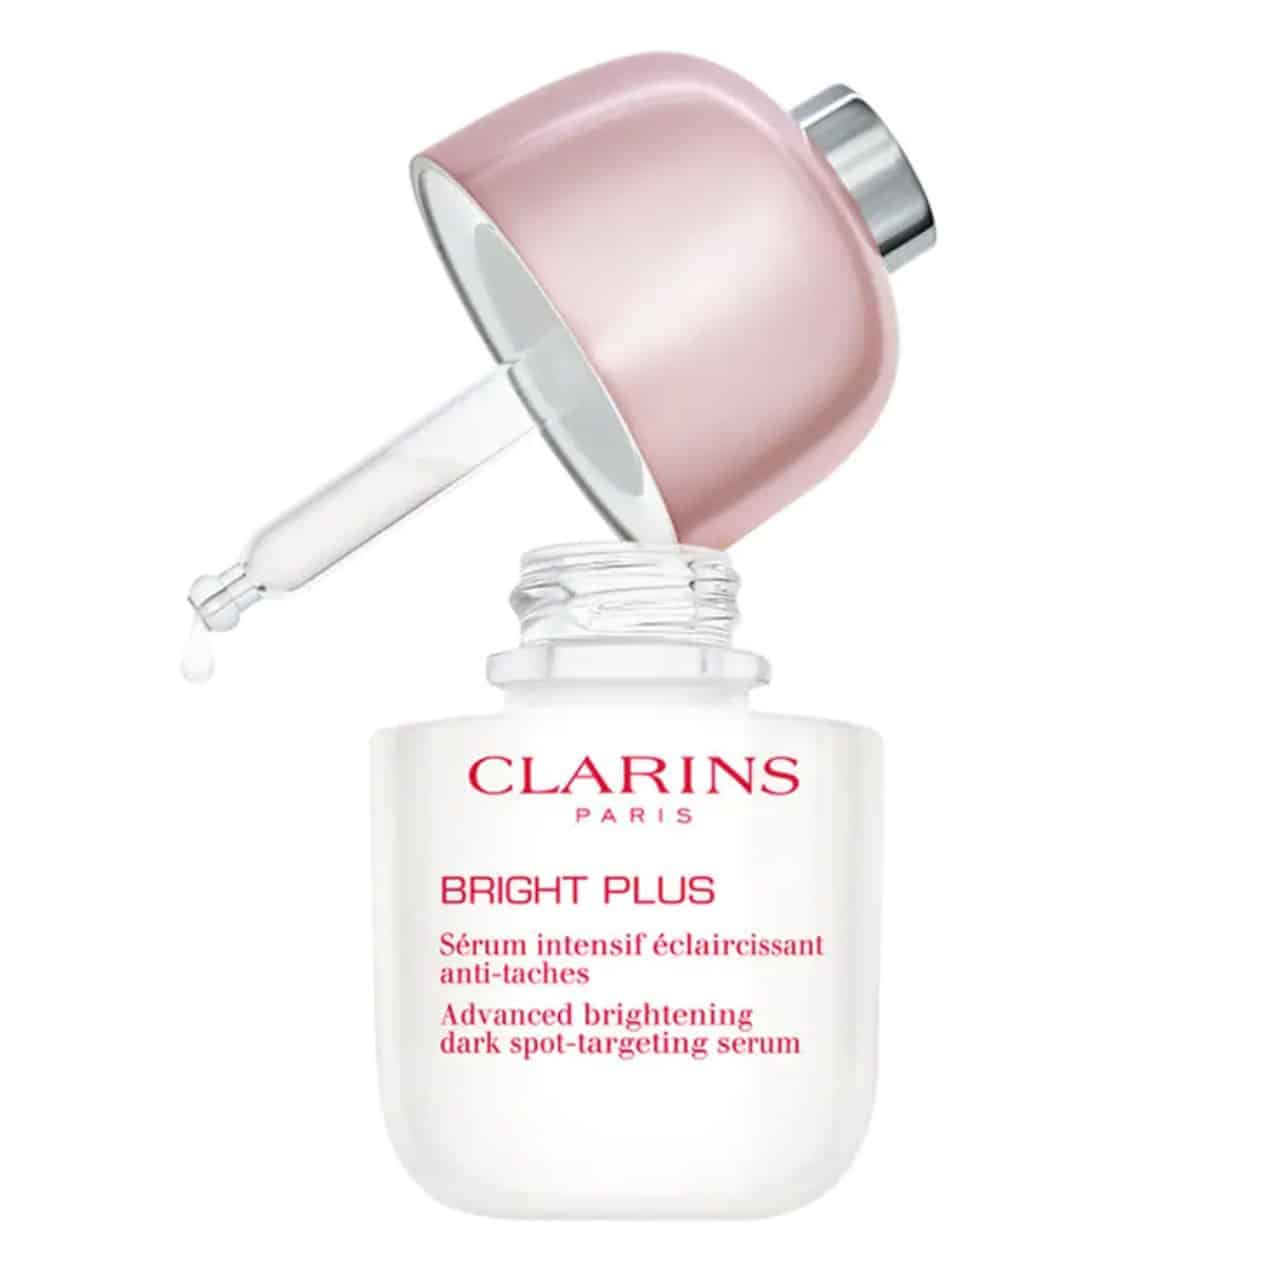 Clarins Bright Plus Advanced dark spot - targeting serum